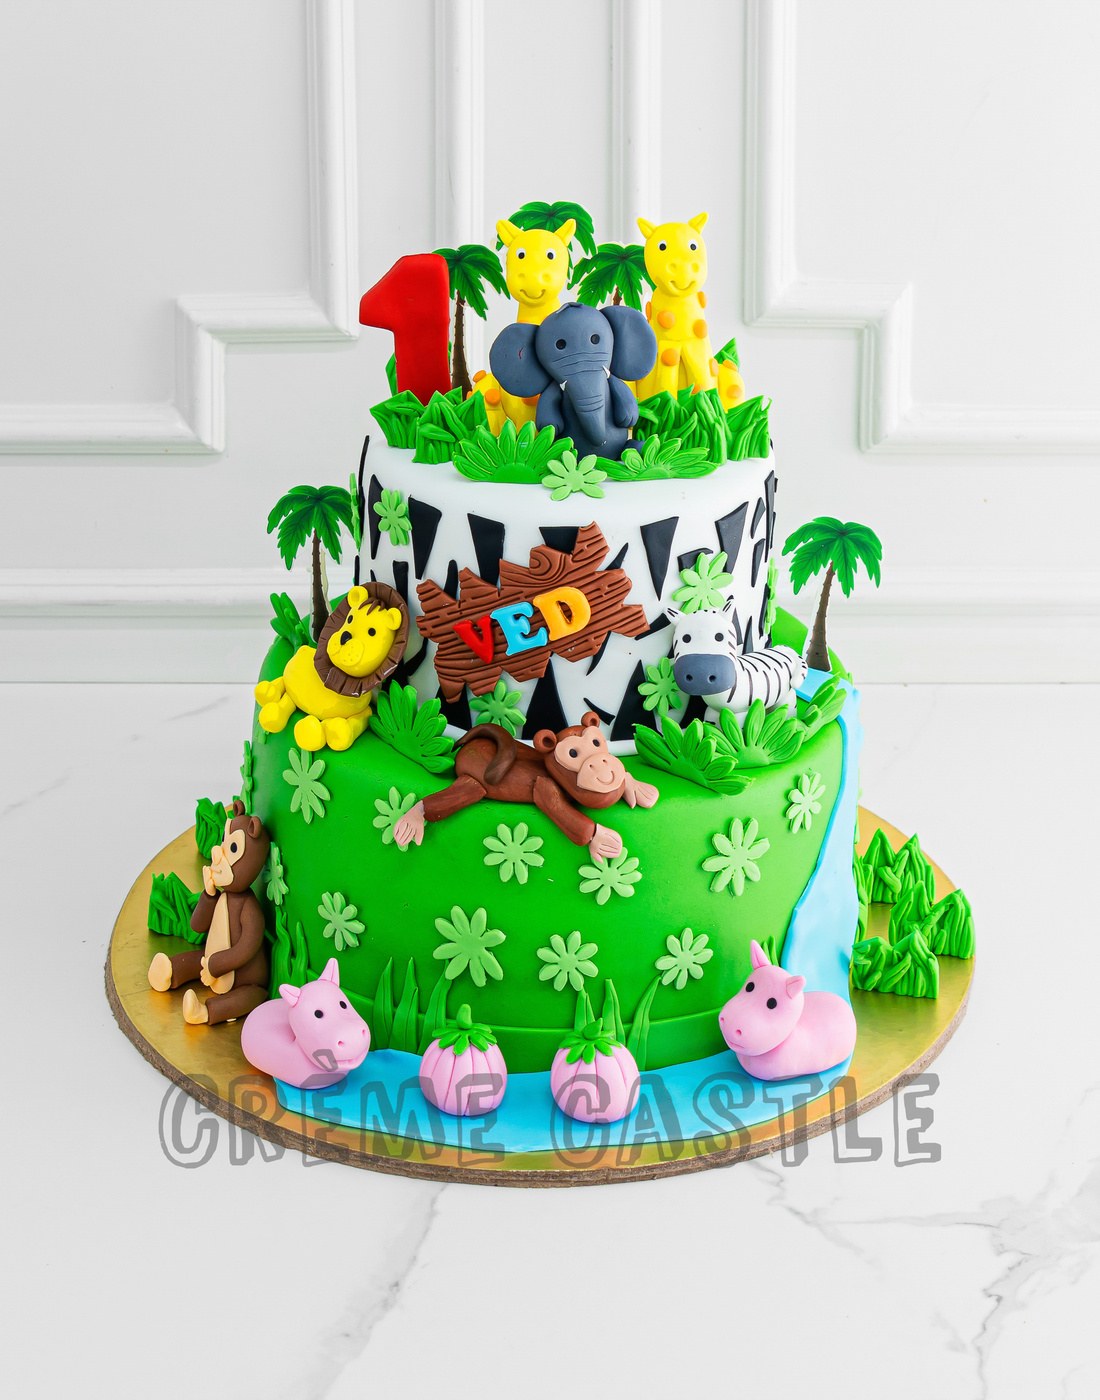 My DRG-Themed Birthday Cake! : r/DeepRockGalactic